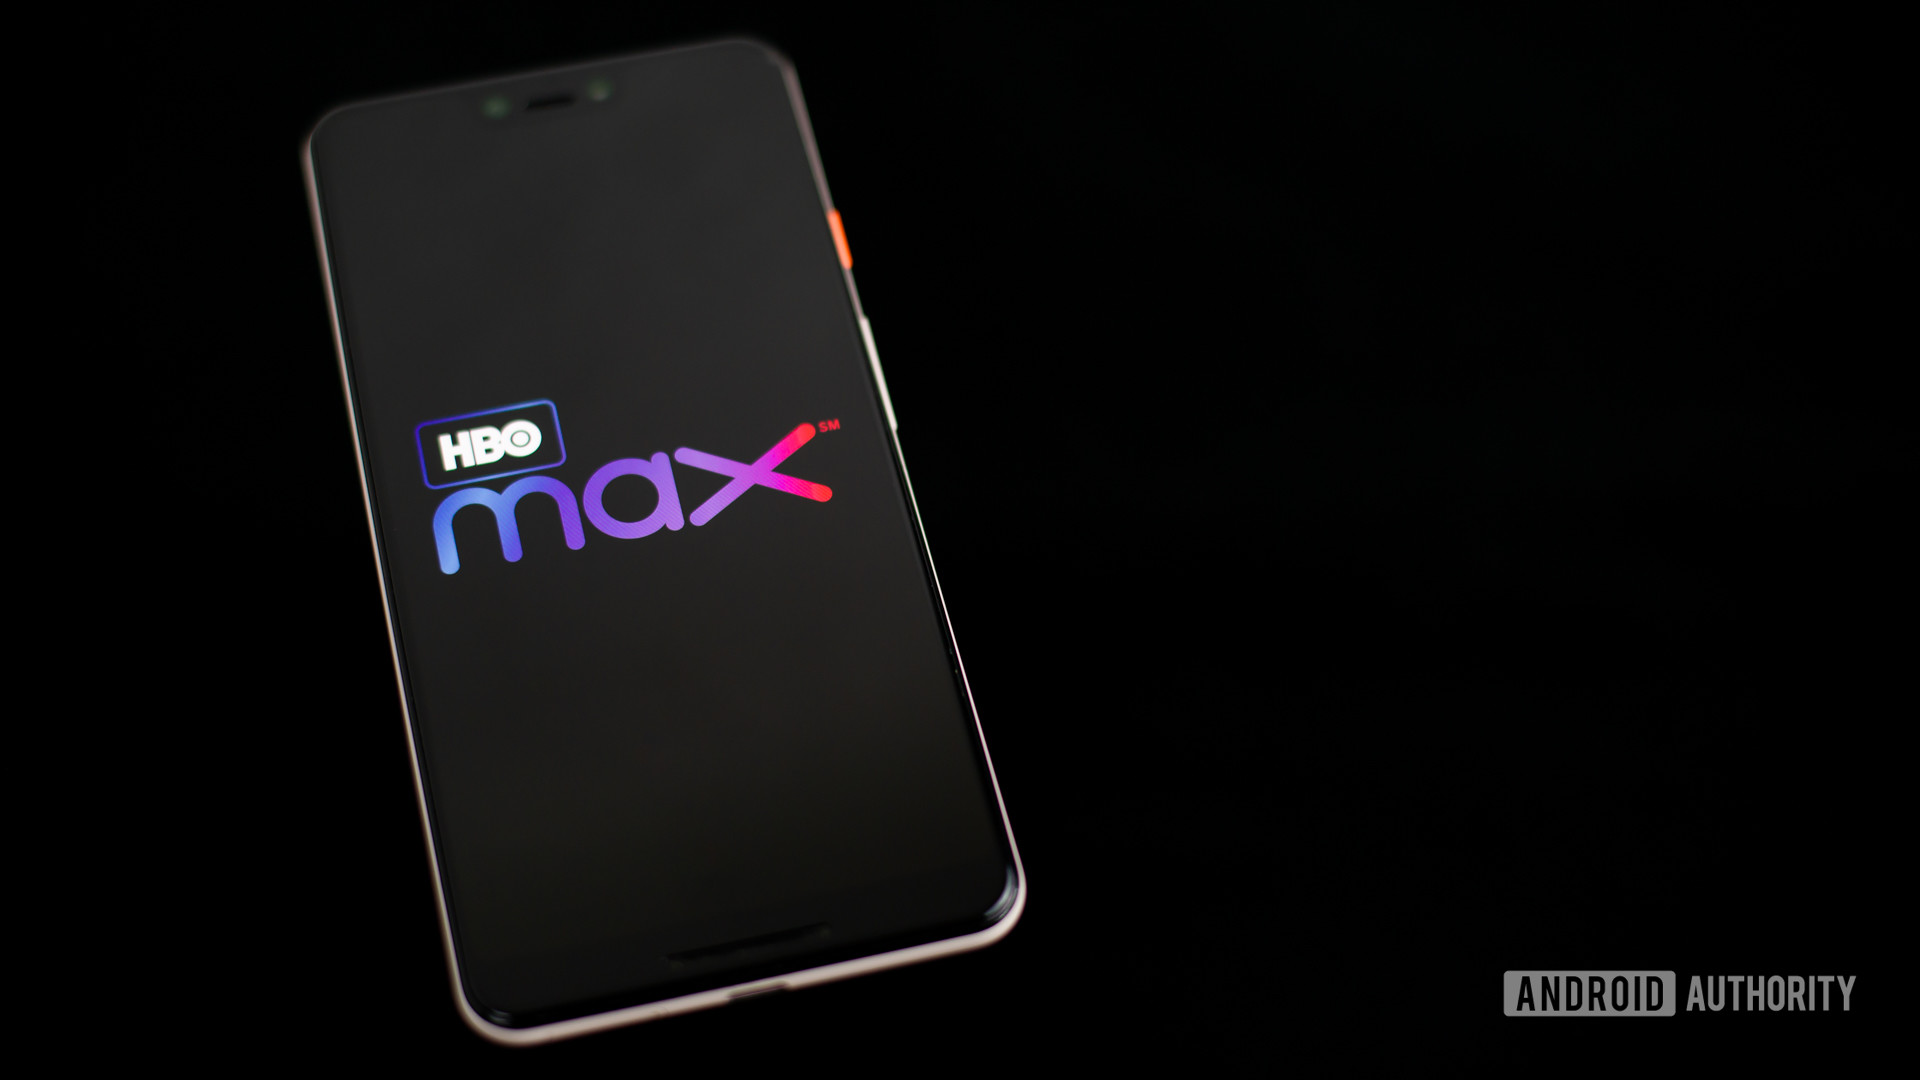 HBO Max logo on smartphone stock photo 2